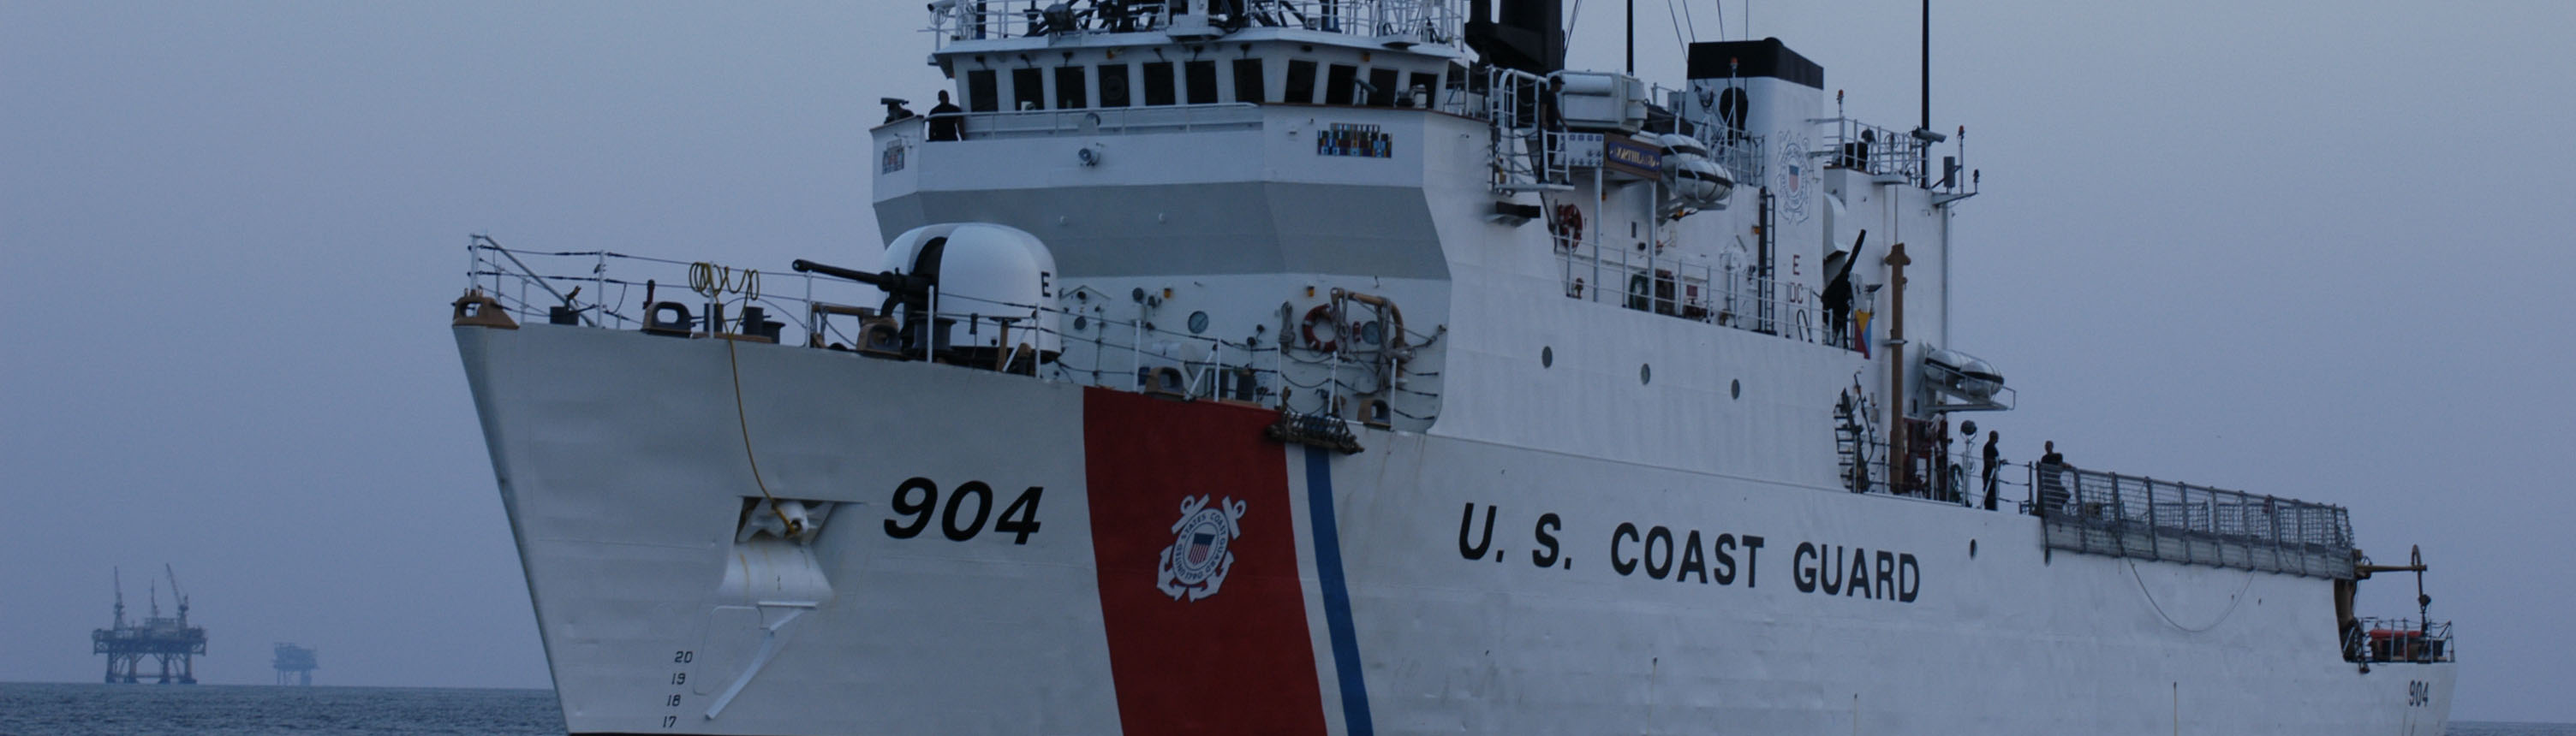 Records of the U.S. Coast Guard